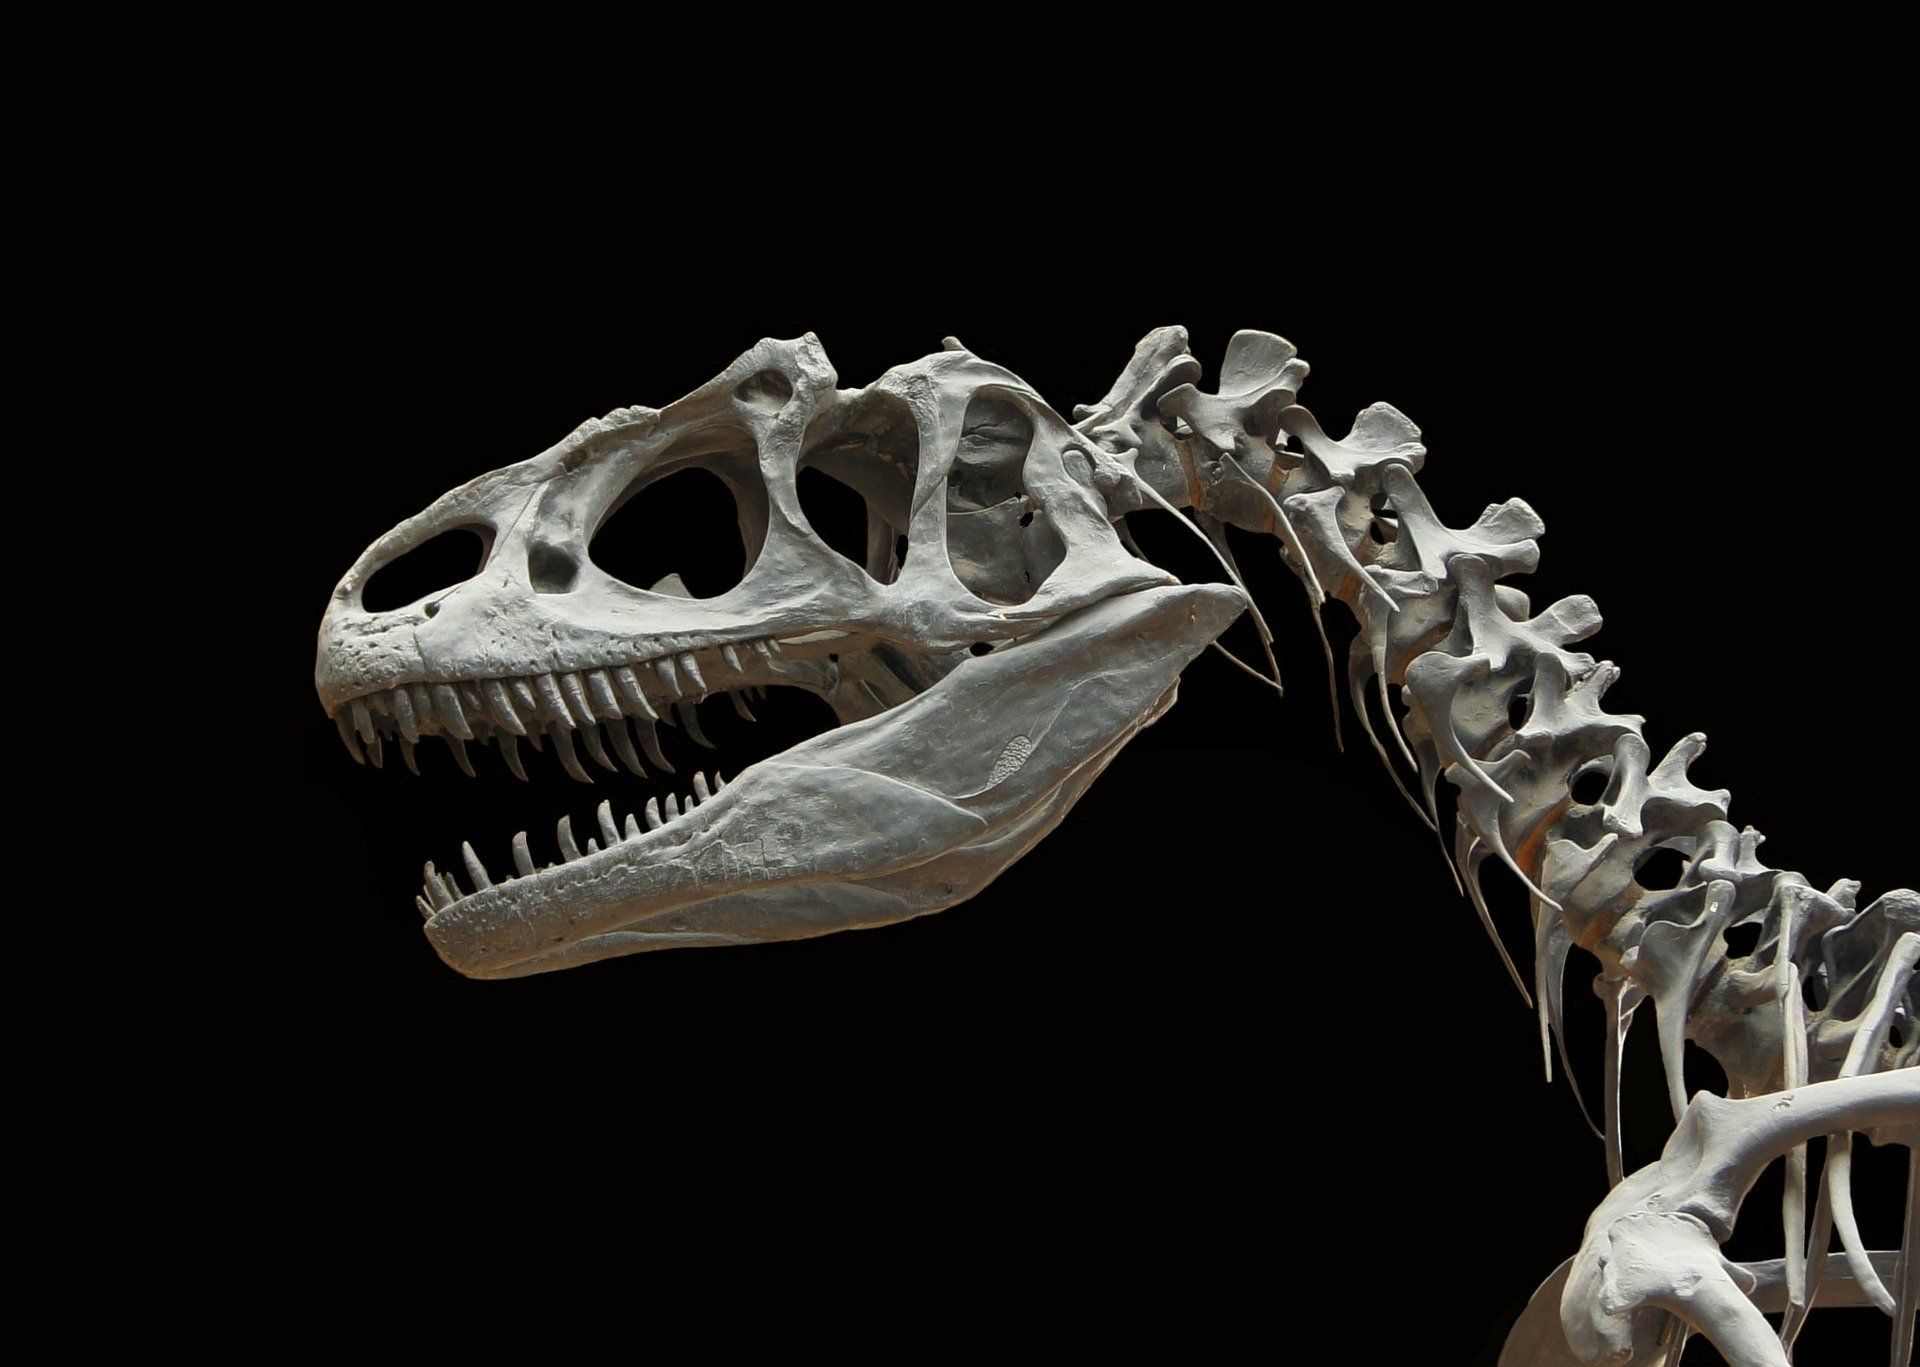 Dinosaur bones display